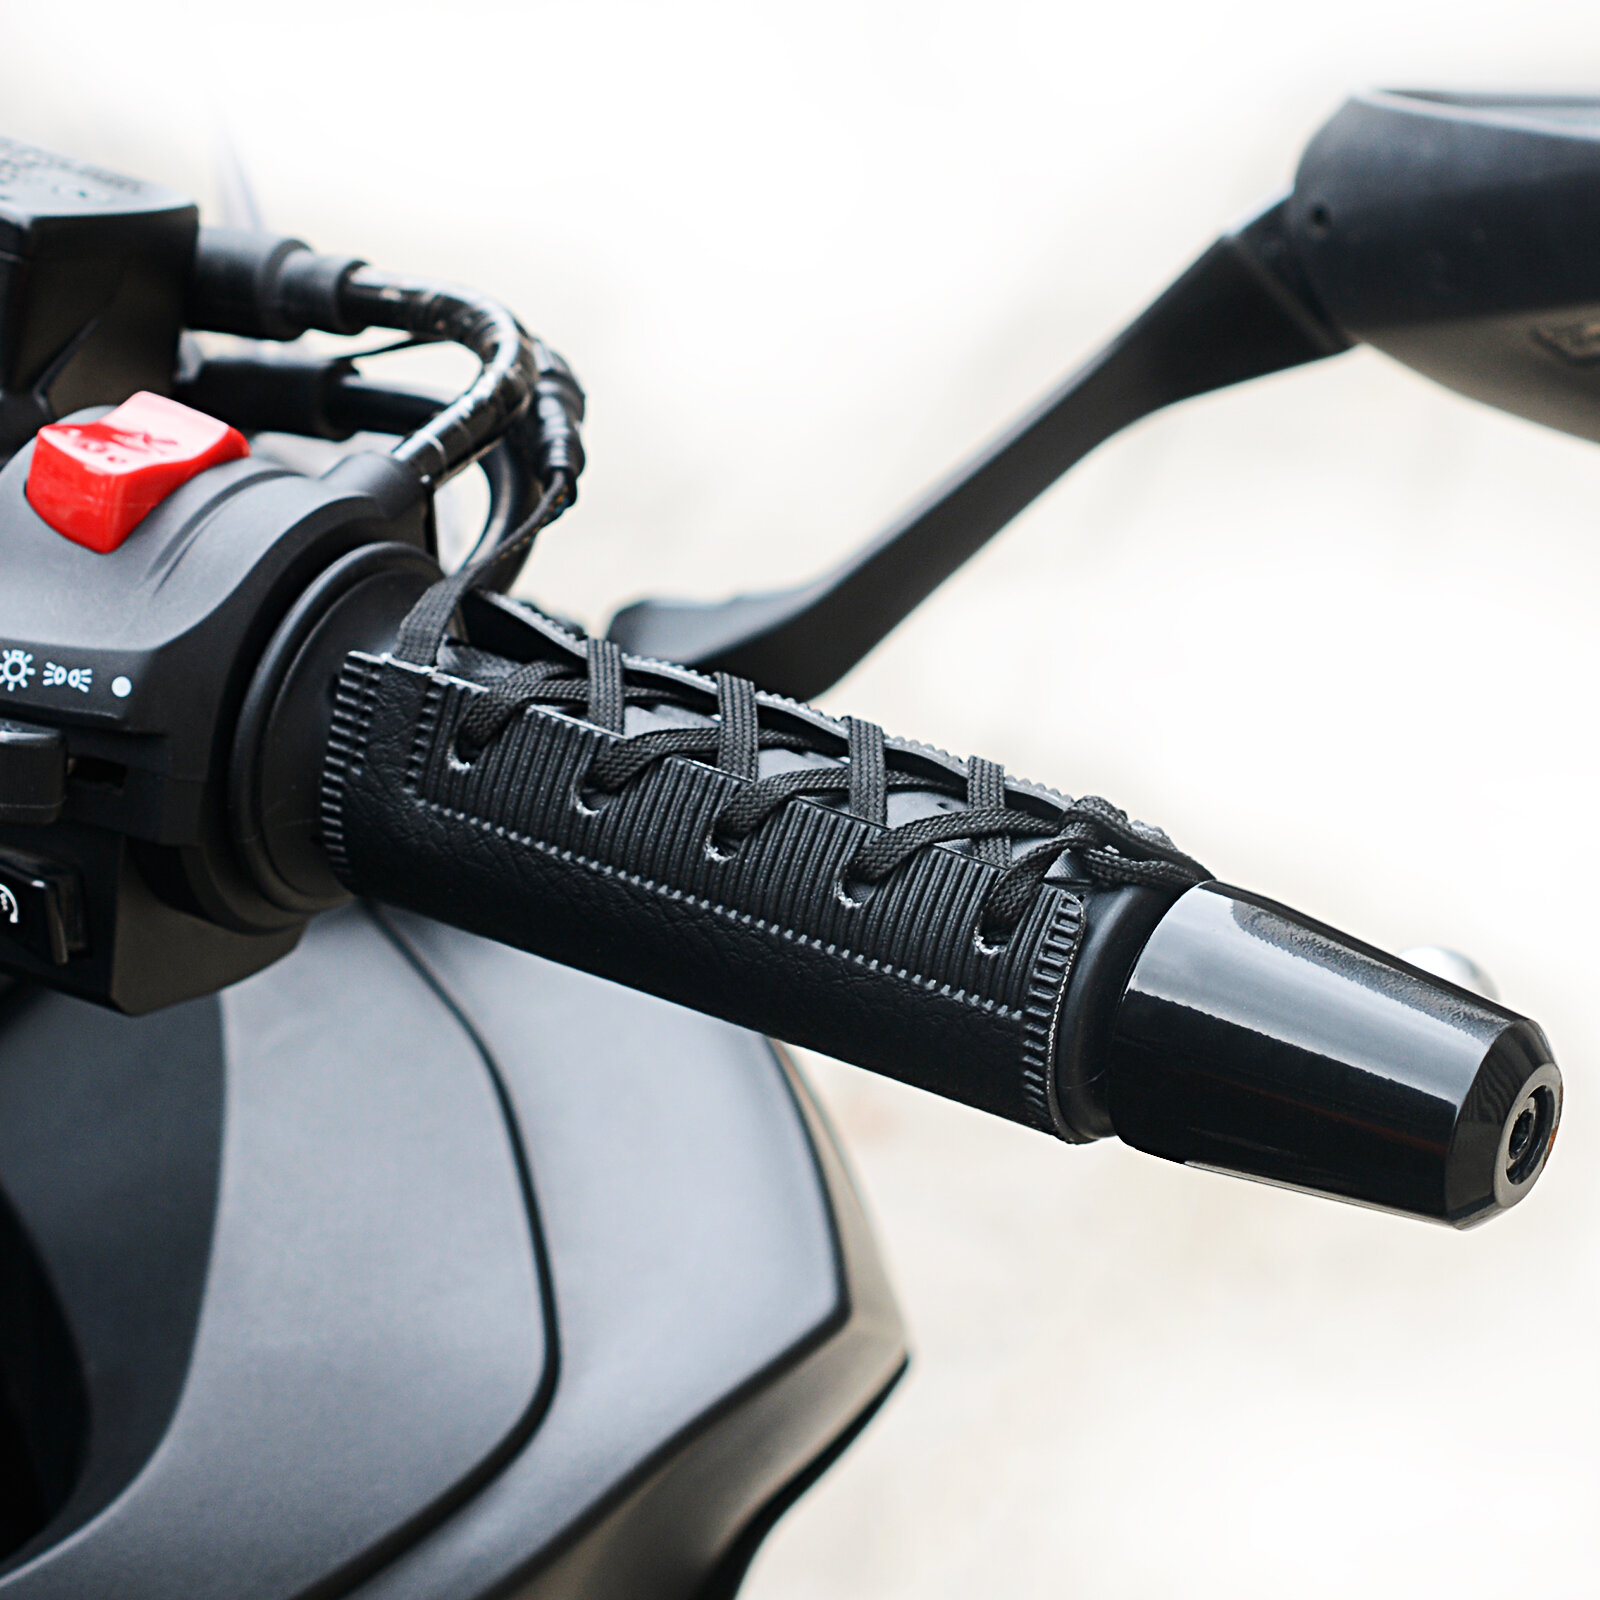 5V USB Electric Heated Handlebar Grip Cover Waterproof Hand Warmer Winter Motorbike Motorcycle